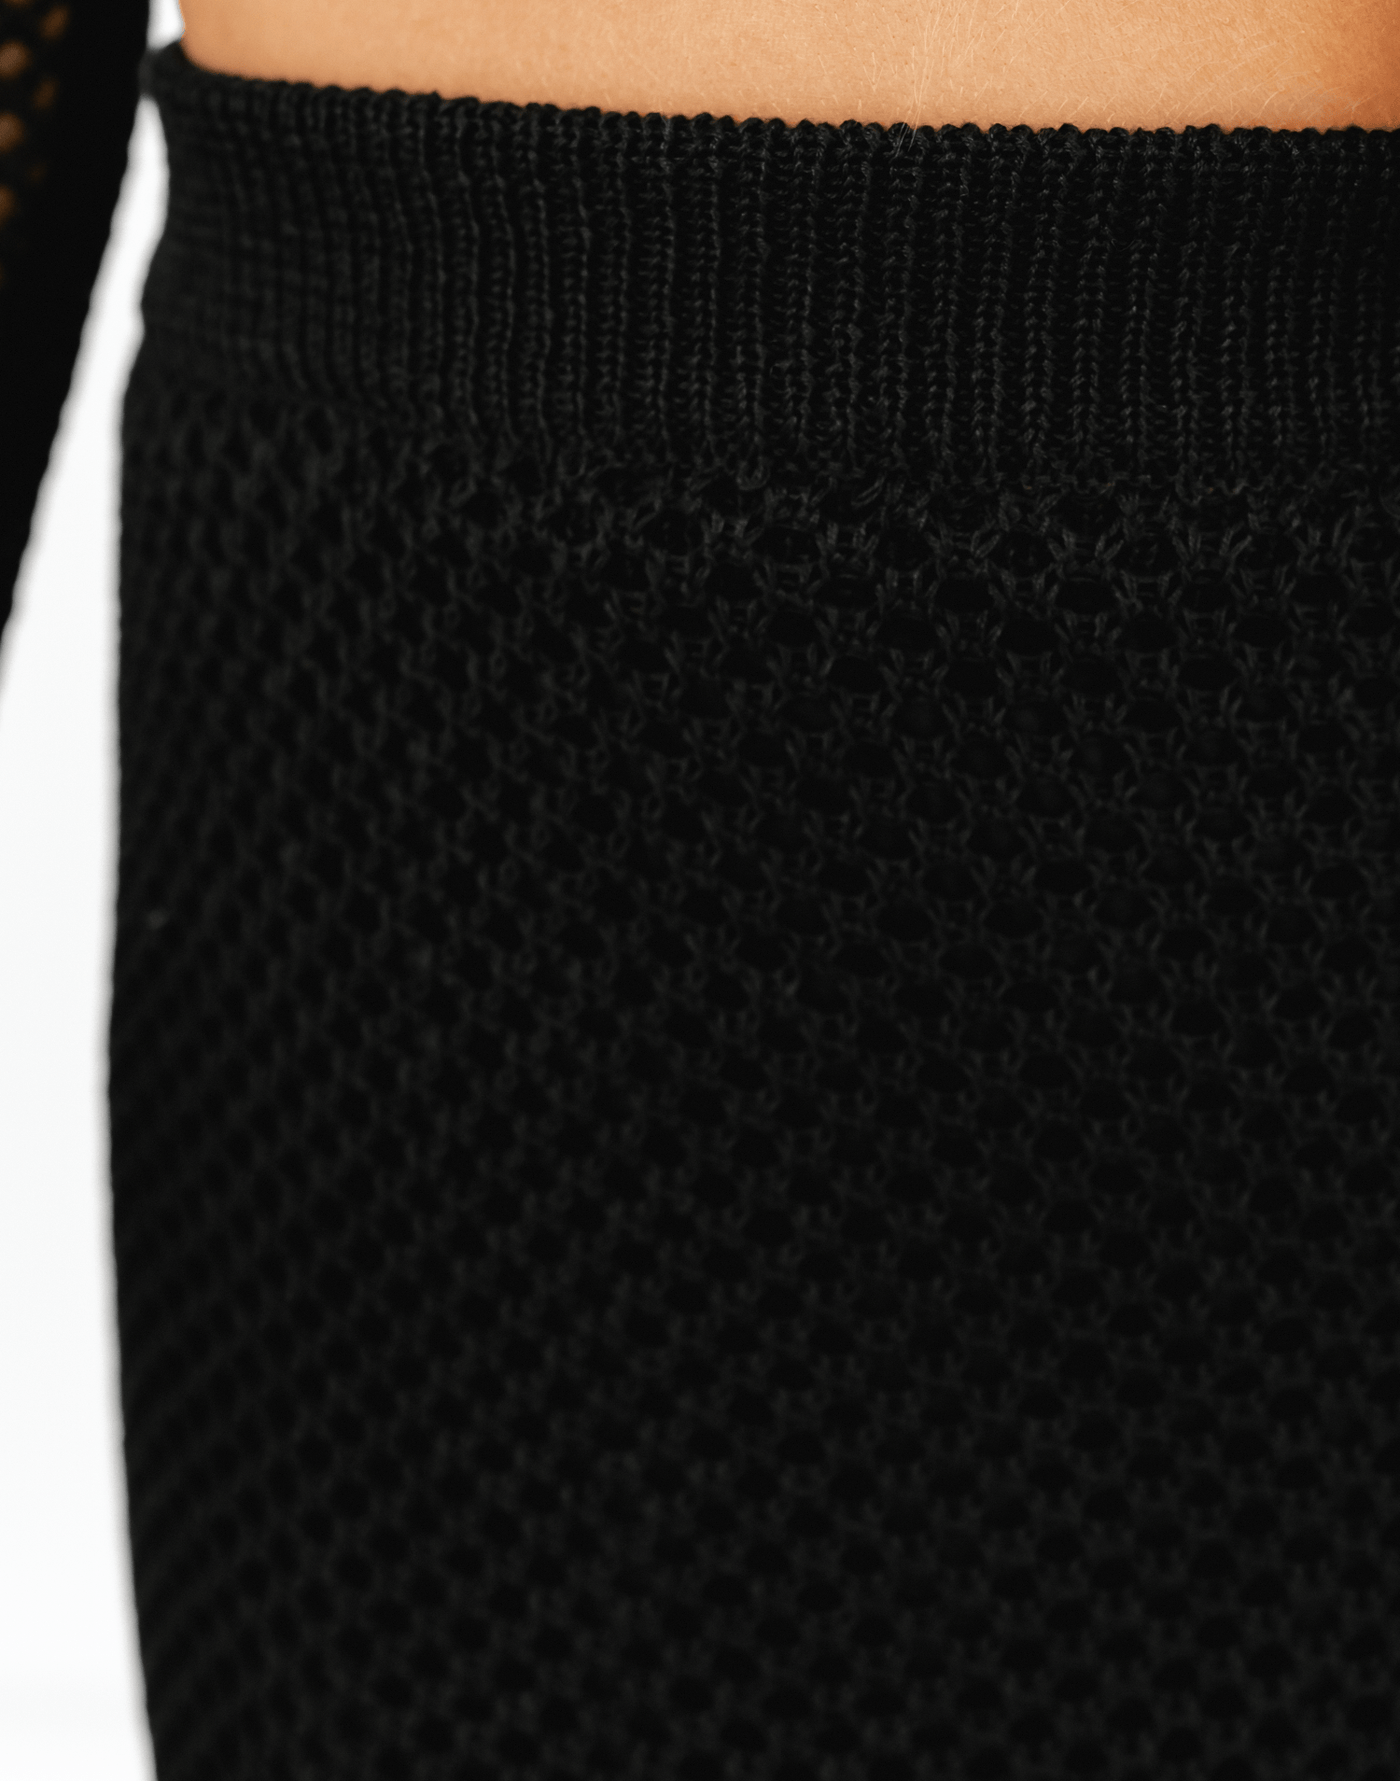 Cyprus Maxi Skirt (Black) - Black Crochet Maxi Skirt - Women's Skirt - Charcoal Clothing